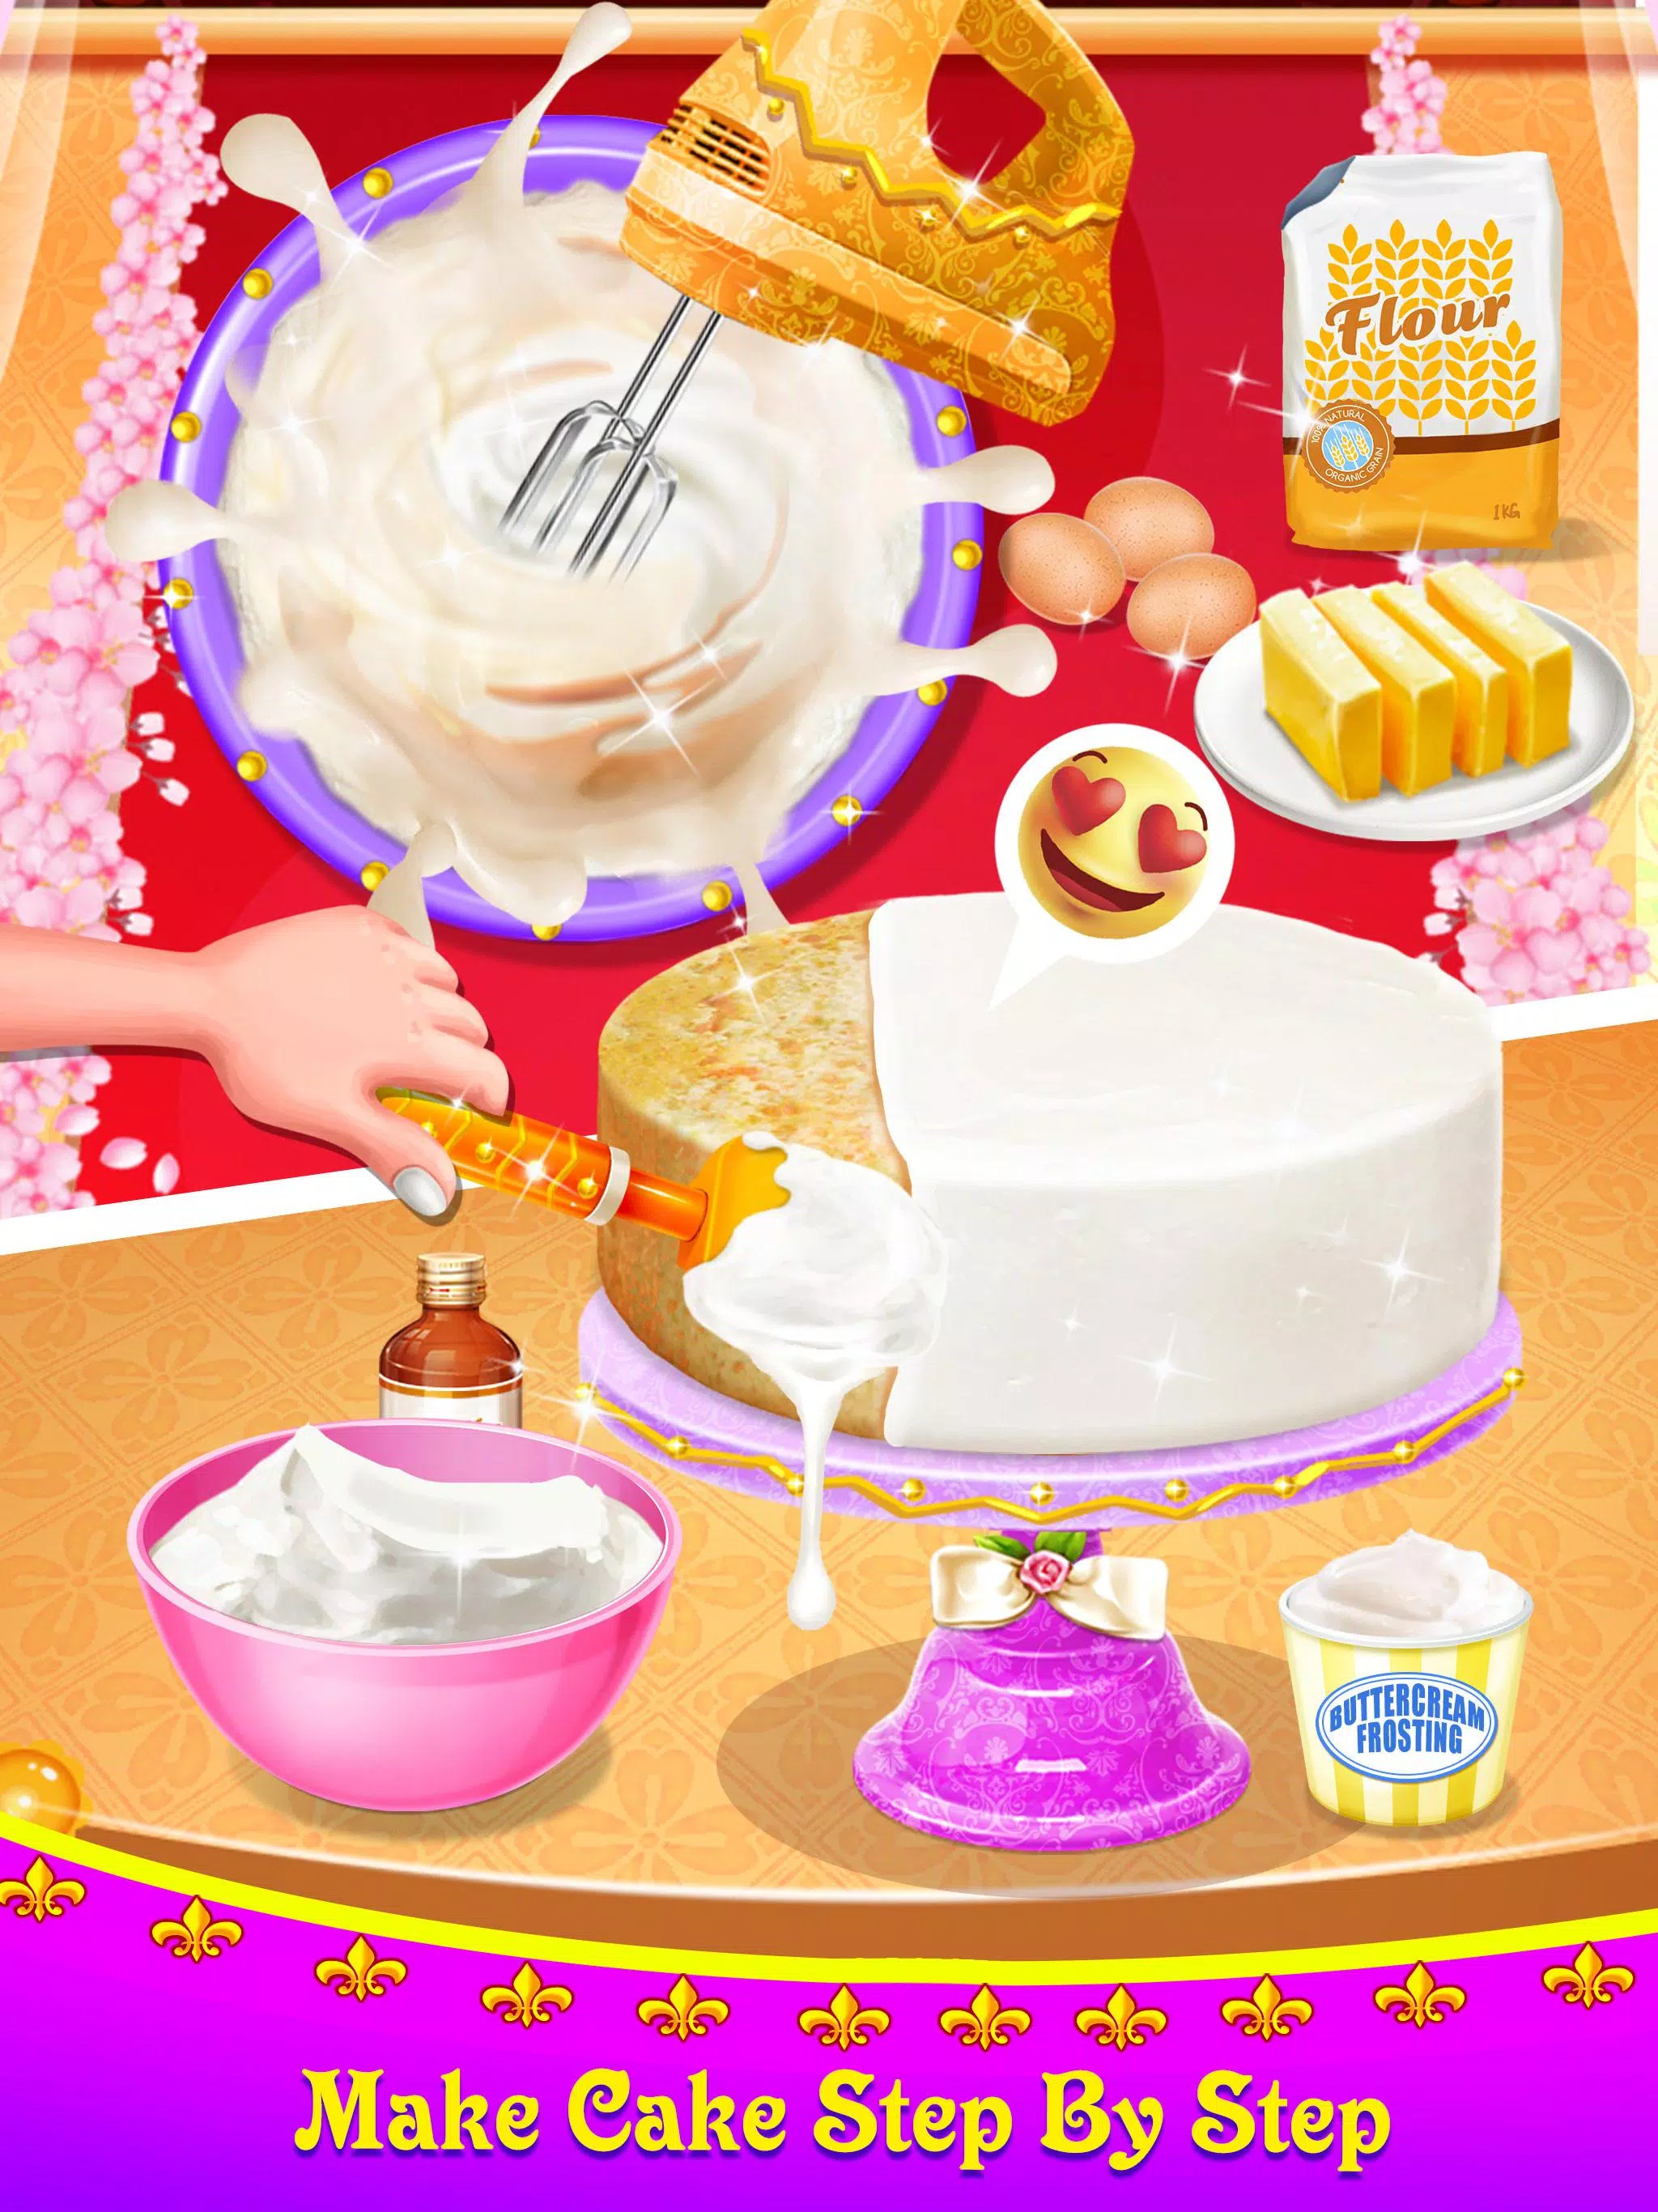 Royal Wedding Cake - Sweet Desserts Maker APK for Android Download